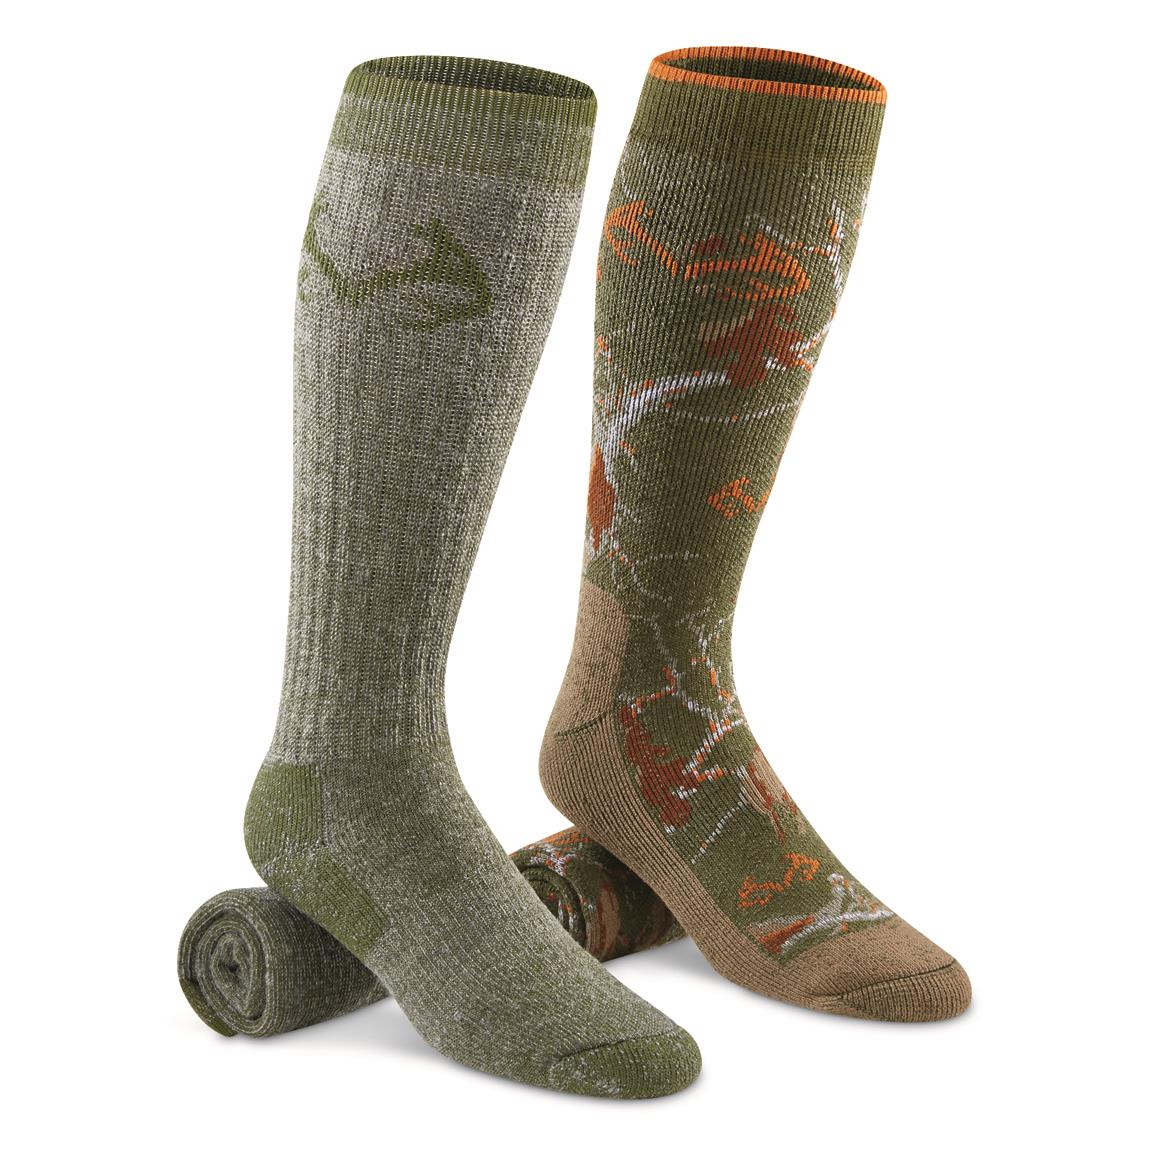 Realtree Men's Merino Wool Blend Boot Socks, 2 Pairs, Olive Camo